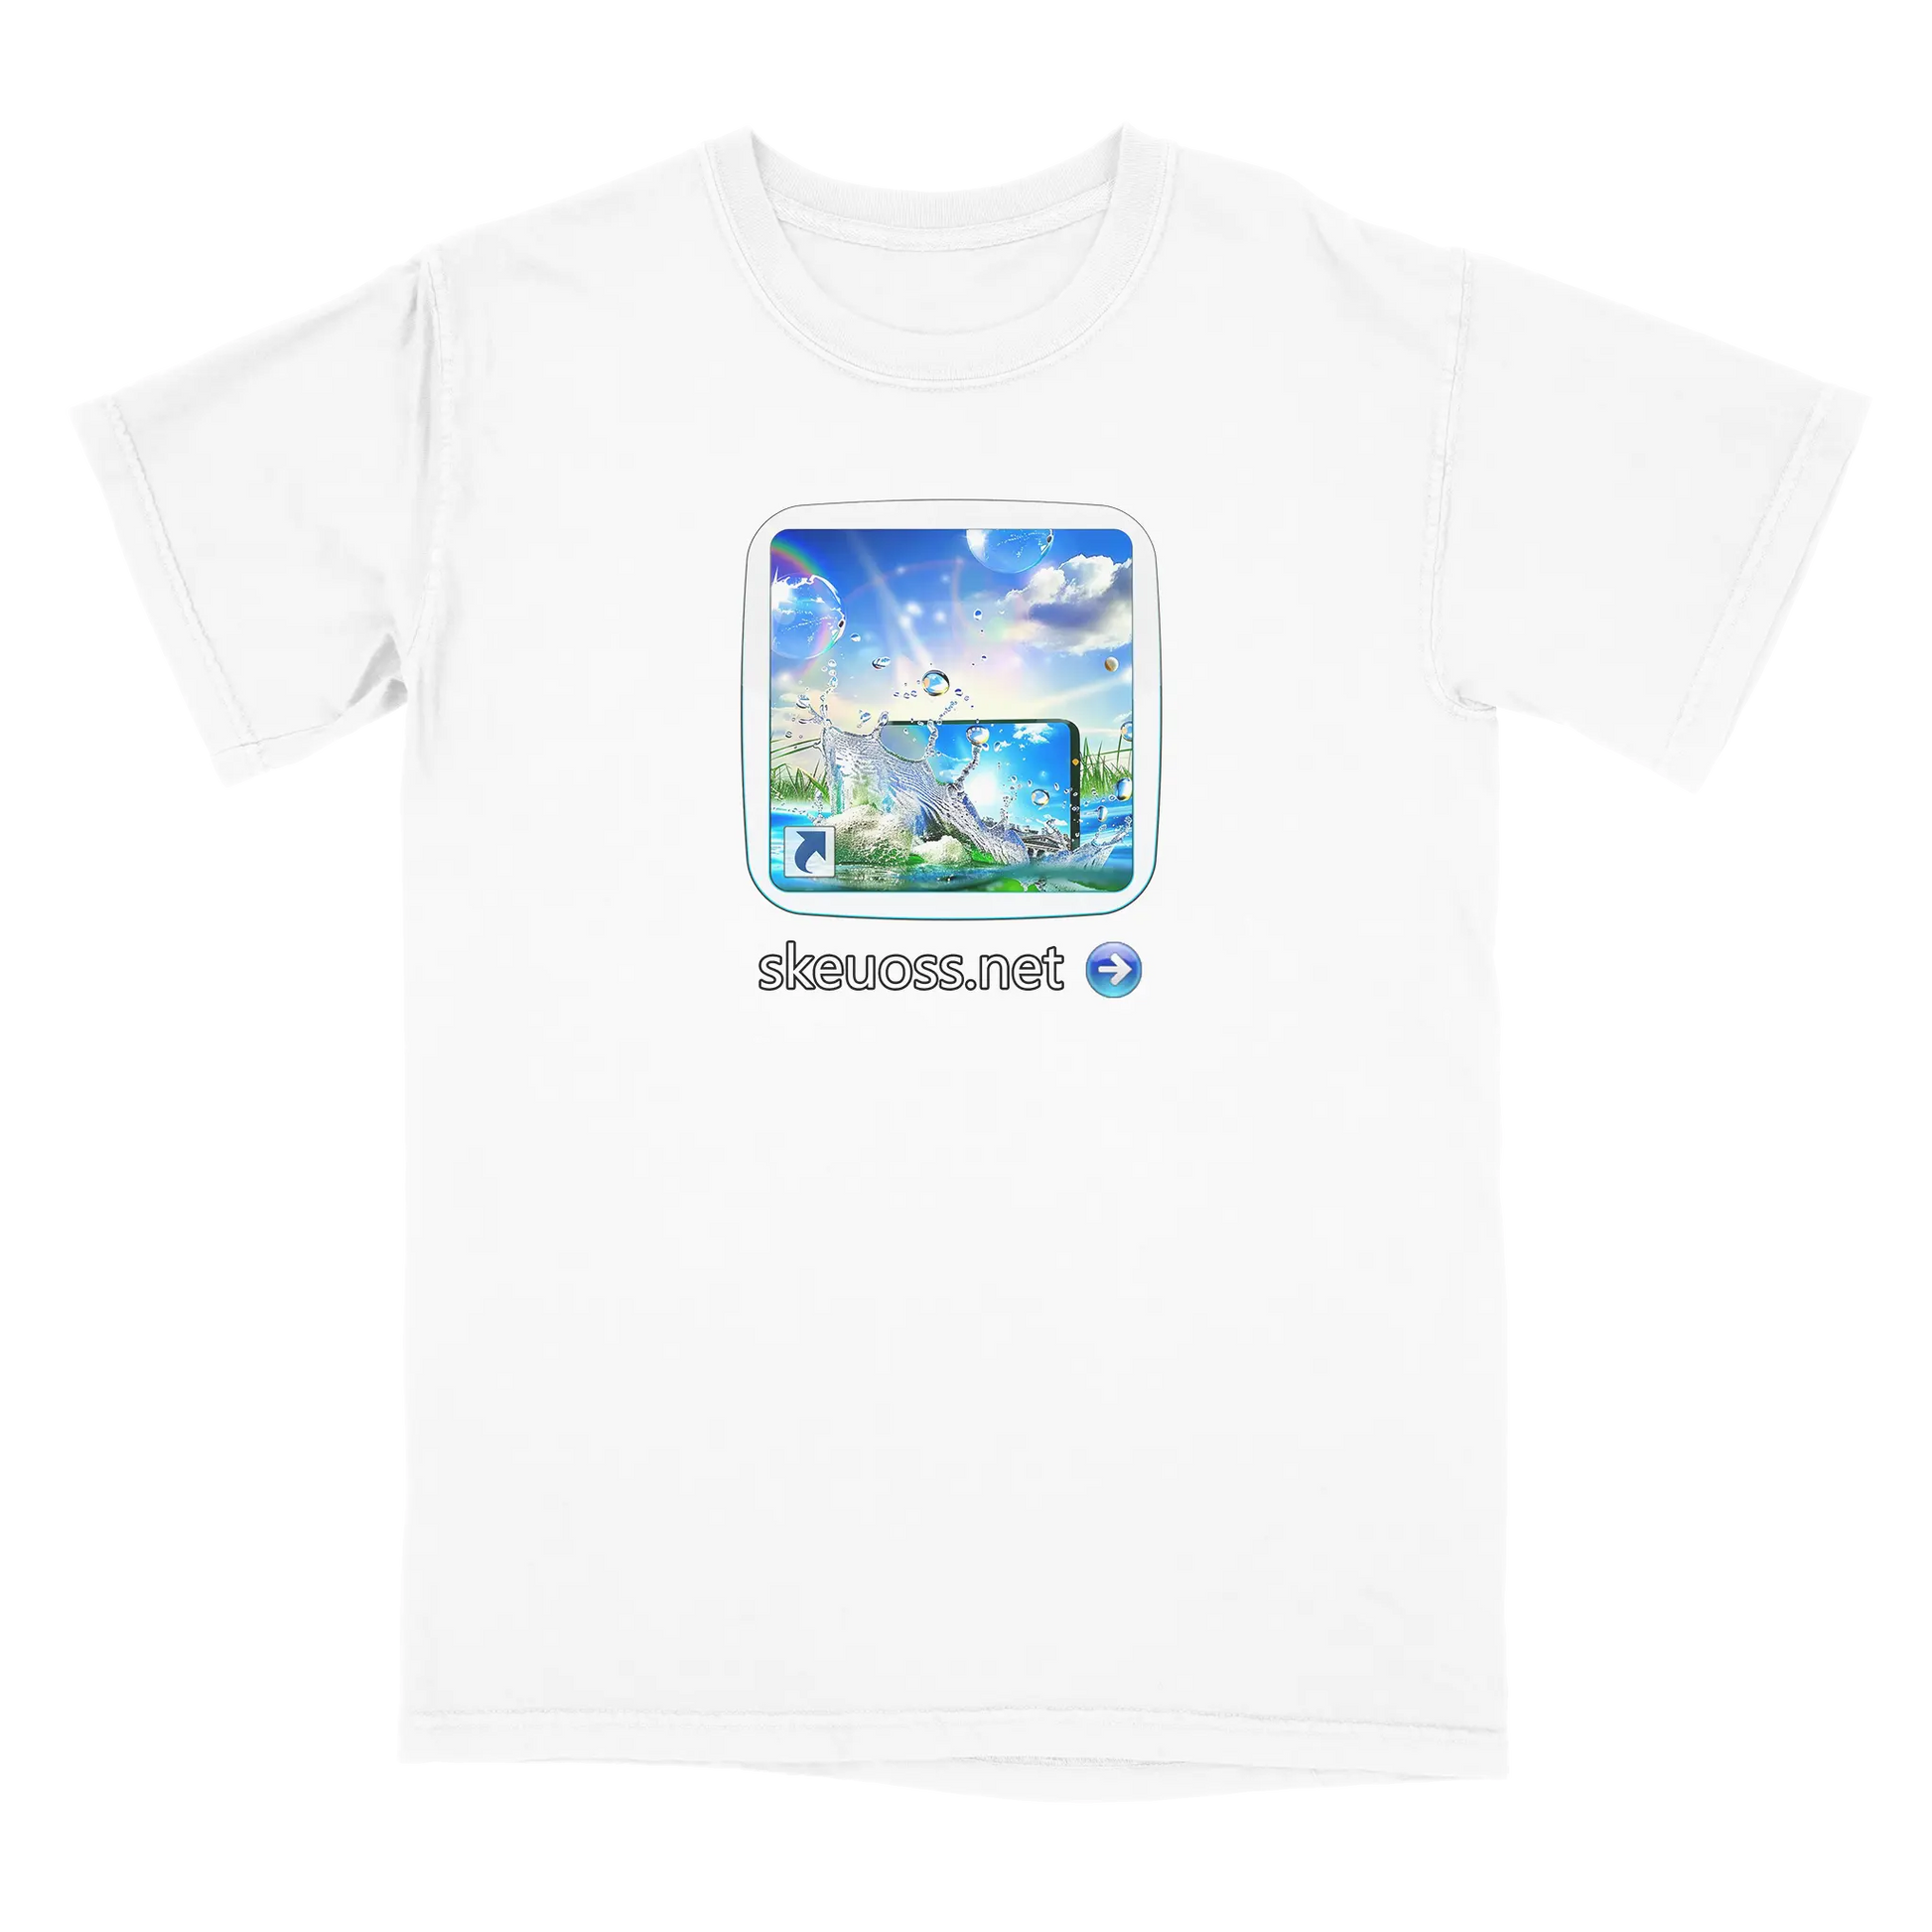 Frutiger Aero T-shirt - User Login Collection - User 187